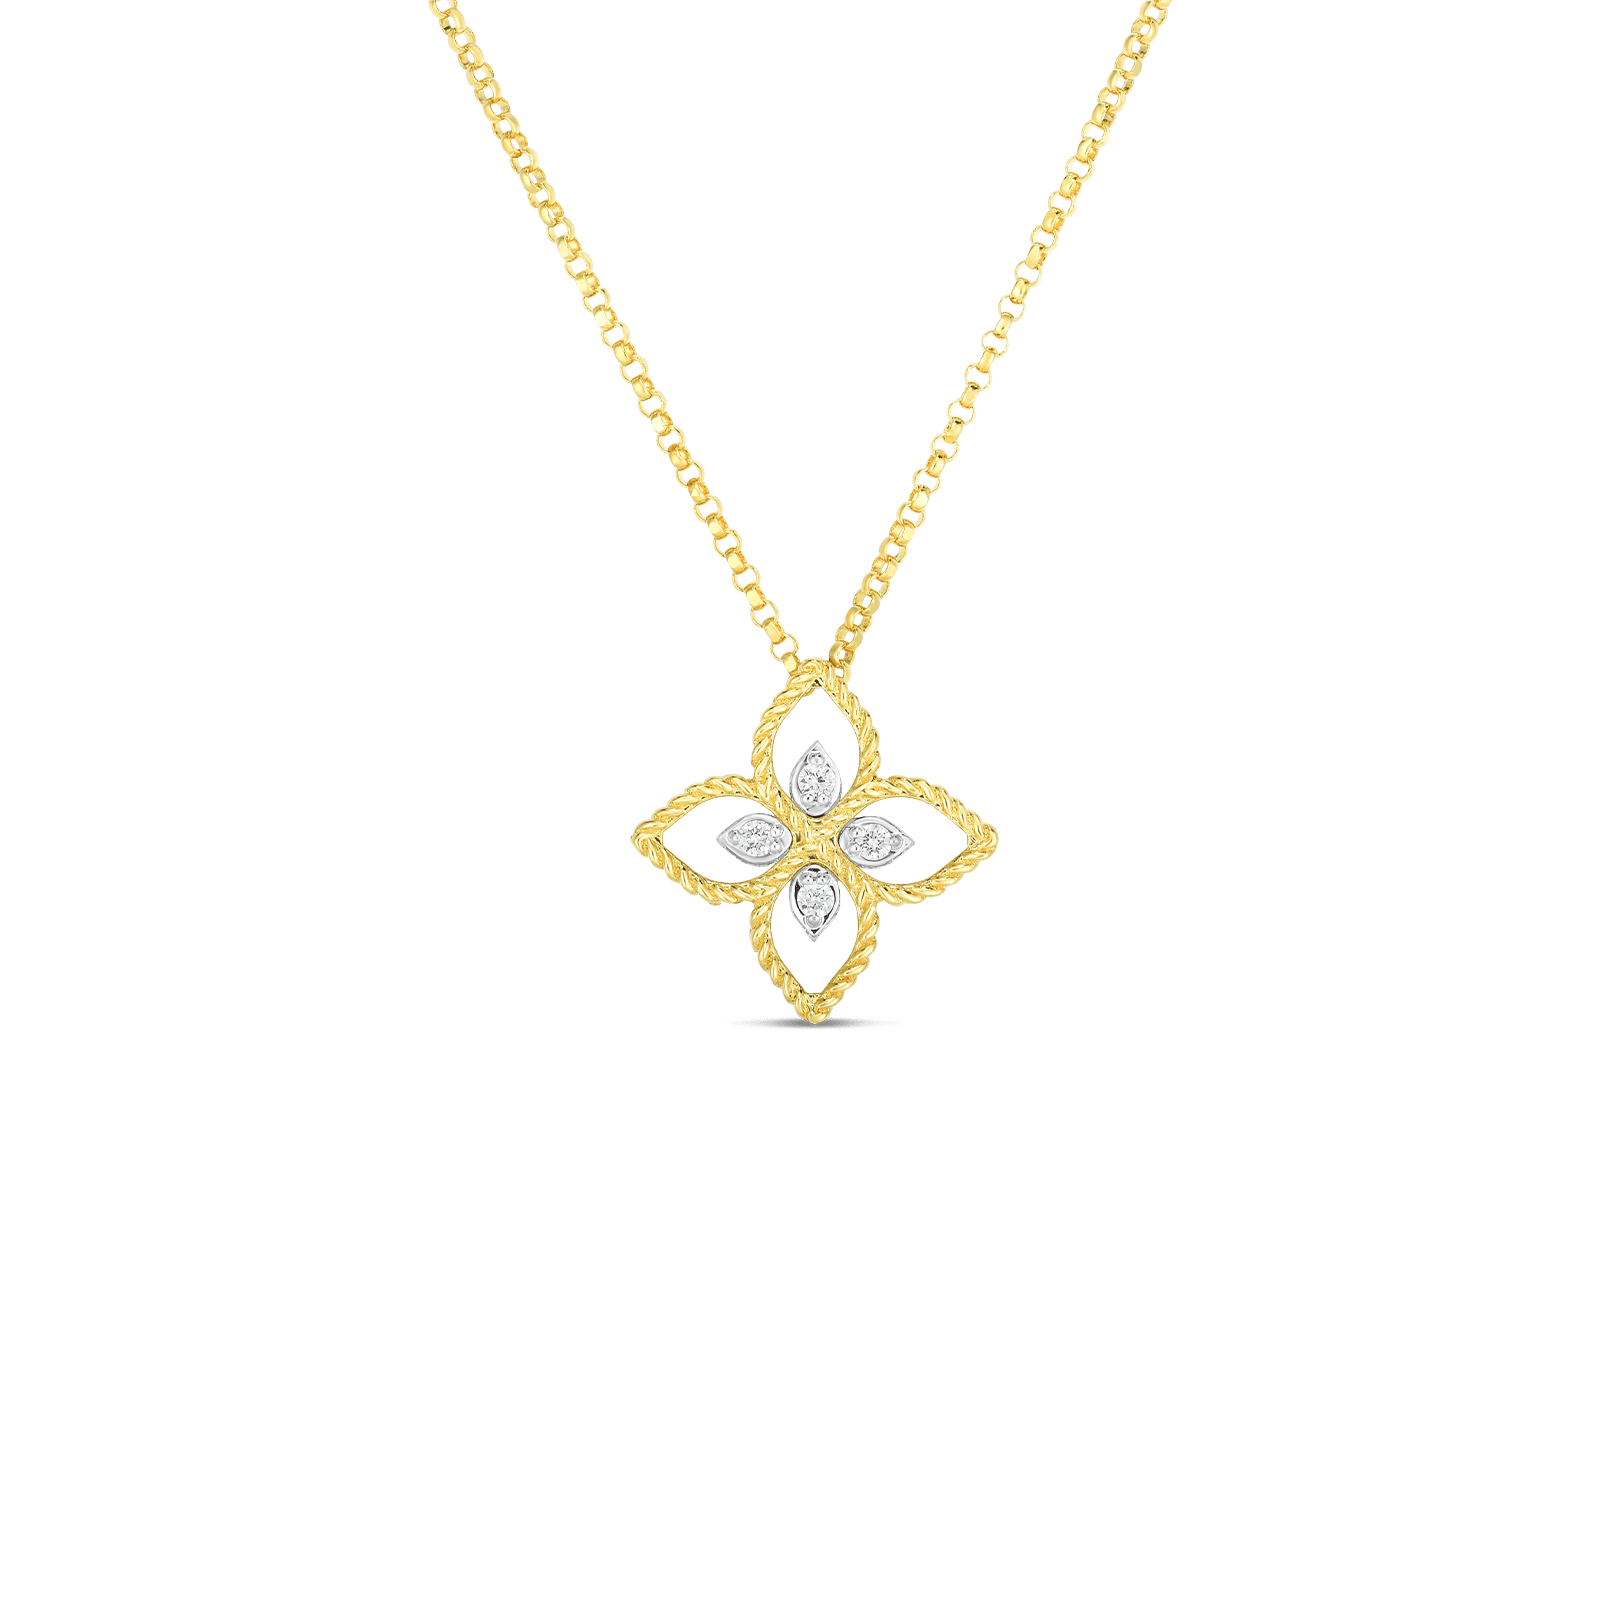 Princess Flower Principessa Small Flower Pendant Necklace 18K Gold with Diamonds